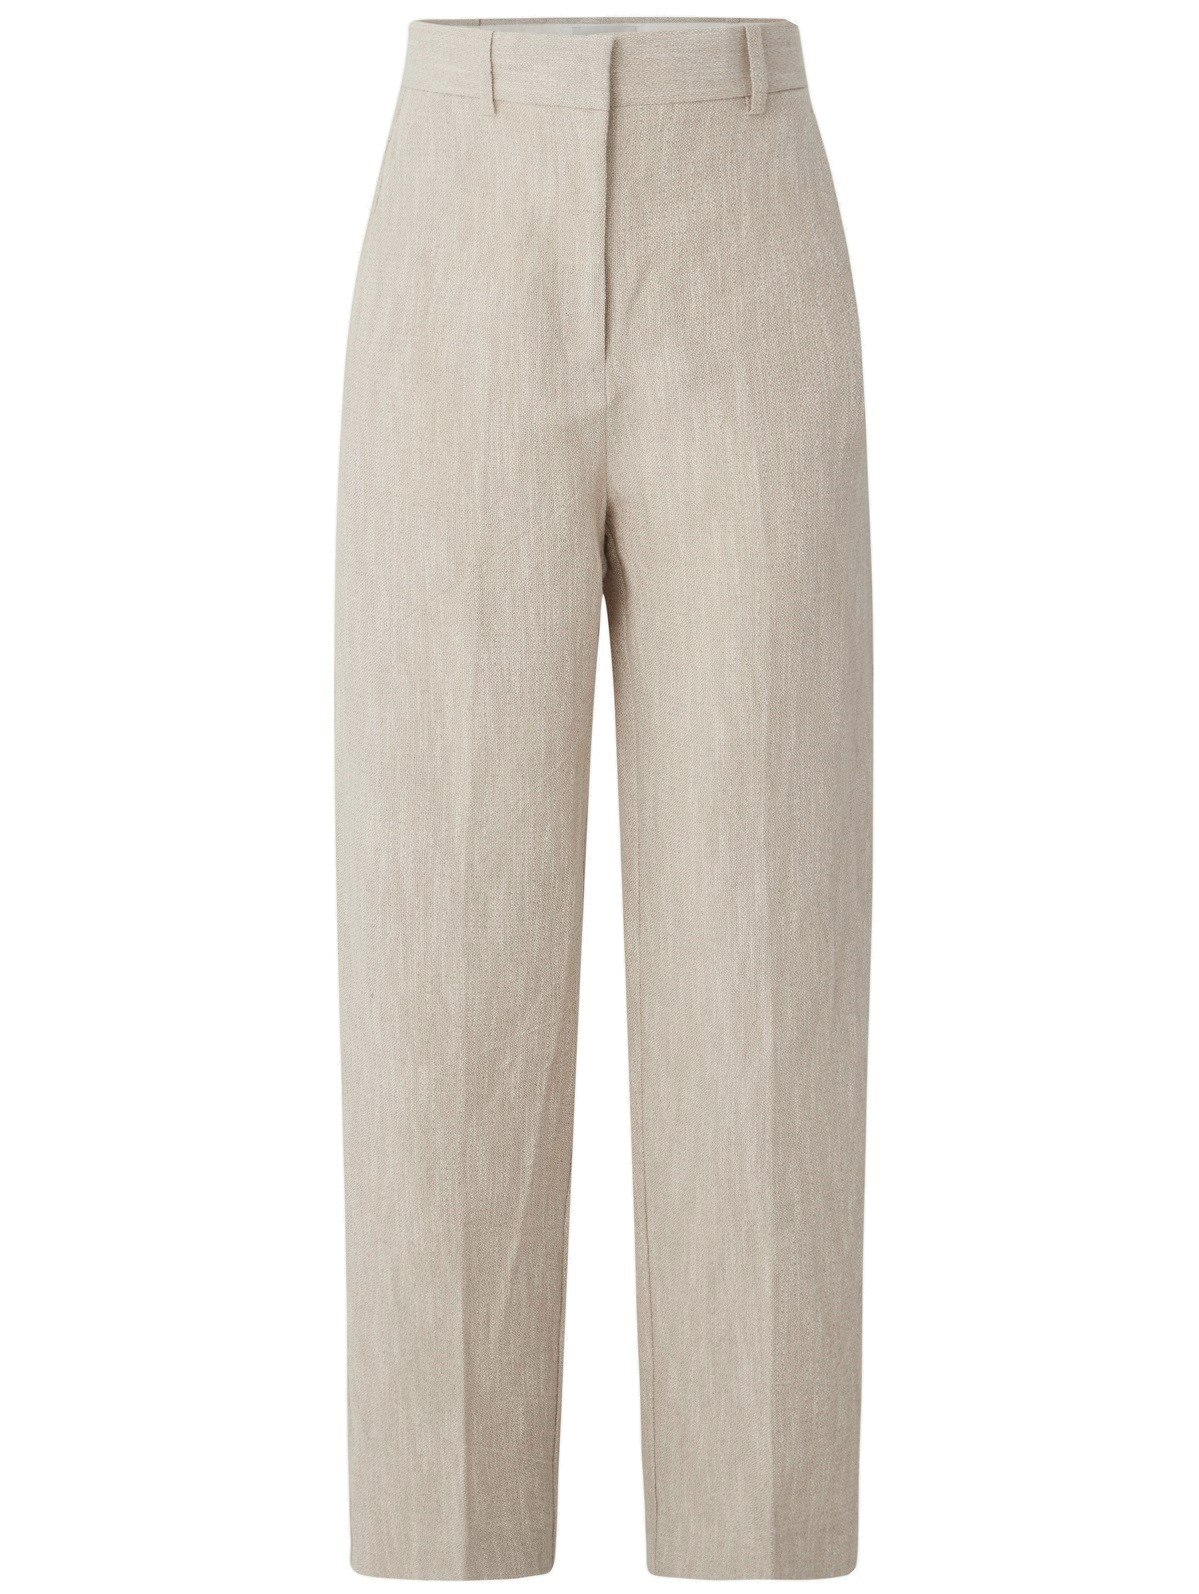 DAGMAR Slim Suit Trouser in Light Sand Beige 38